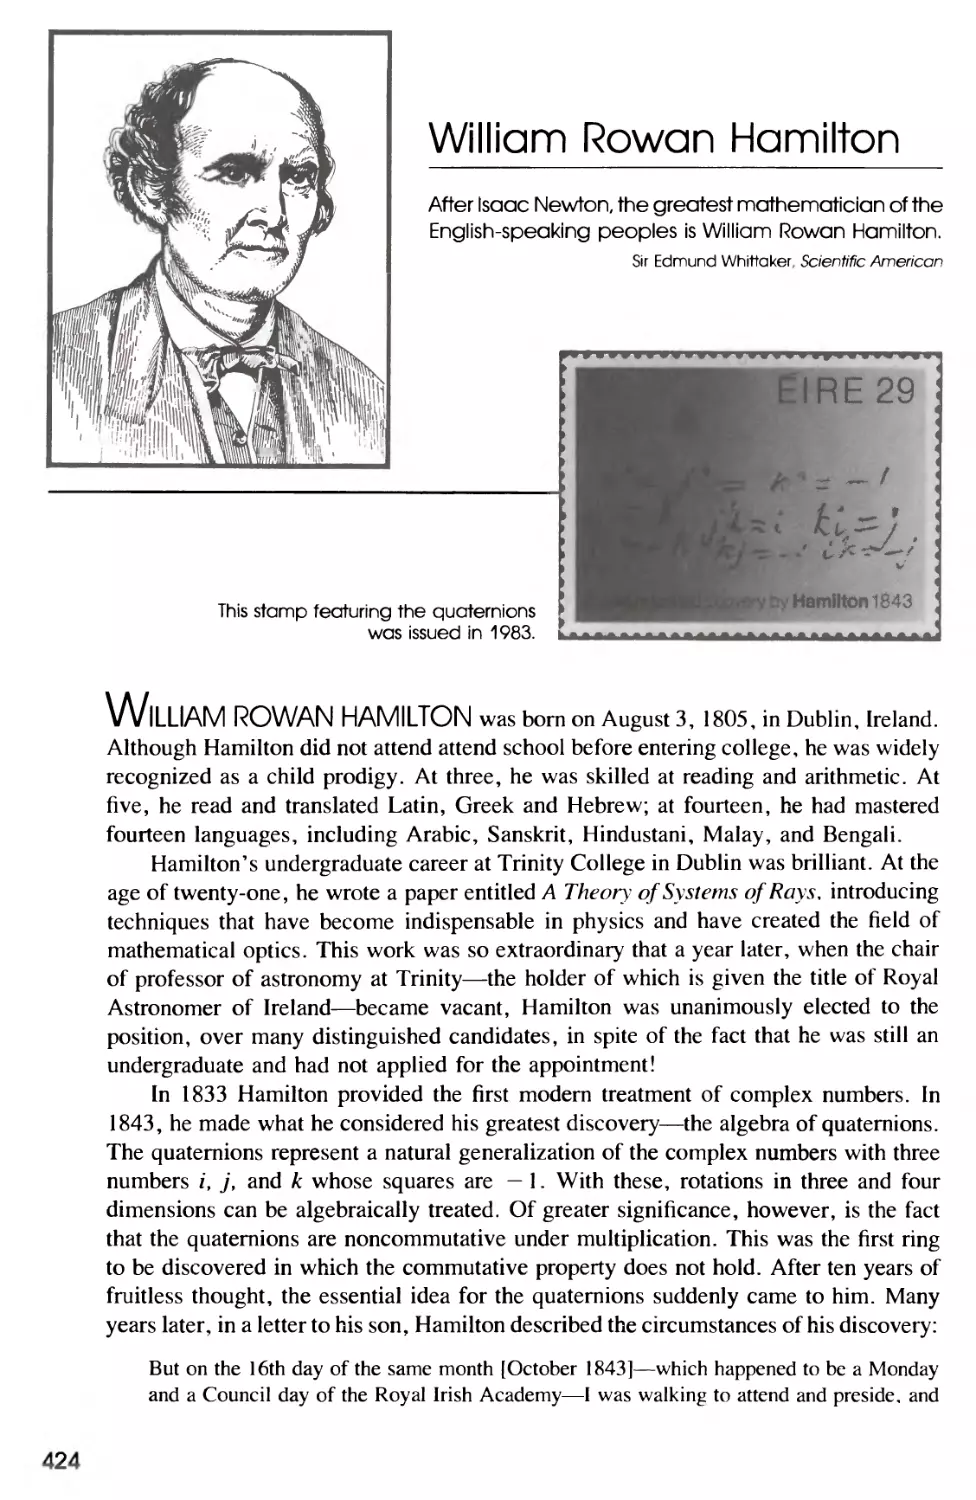 Biography of William Rowan Hamilton